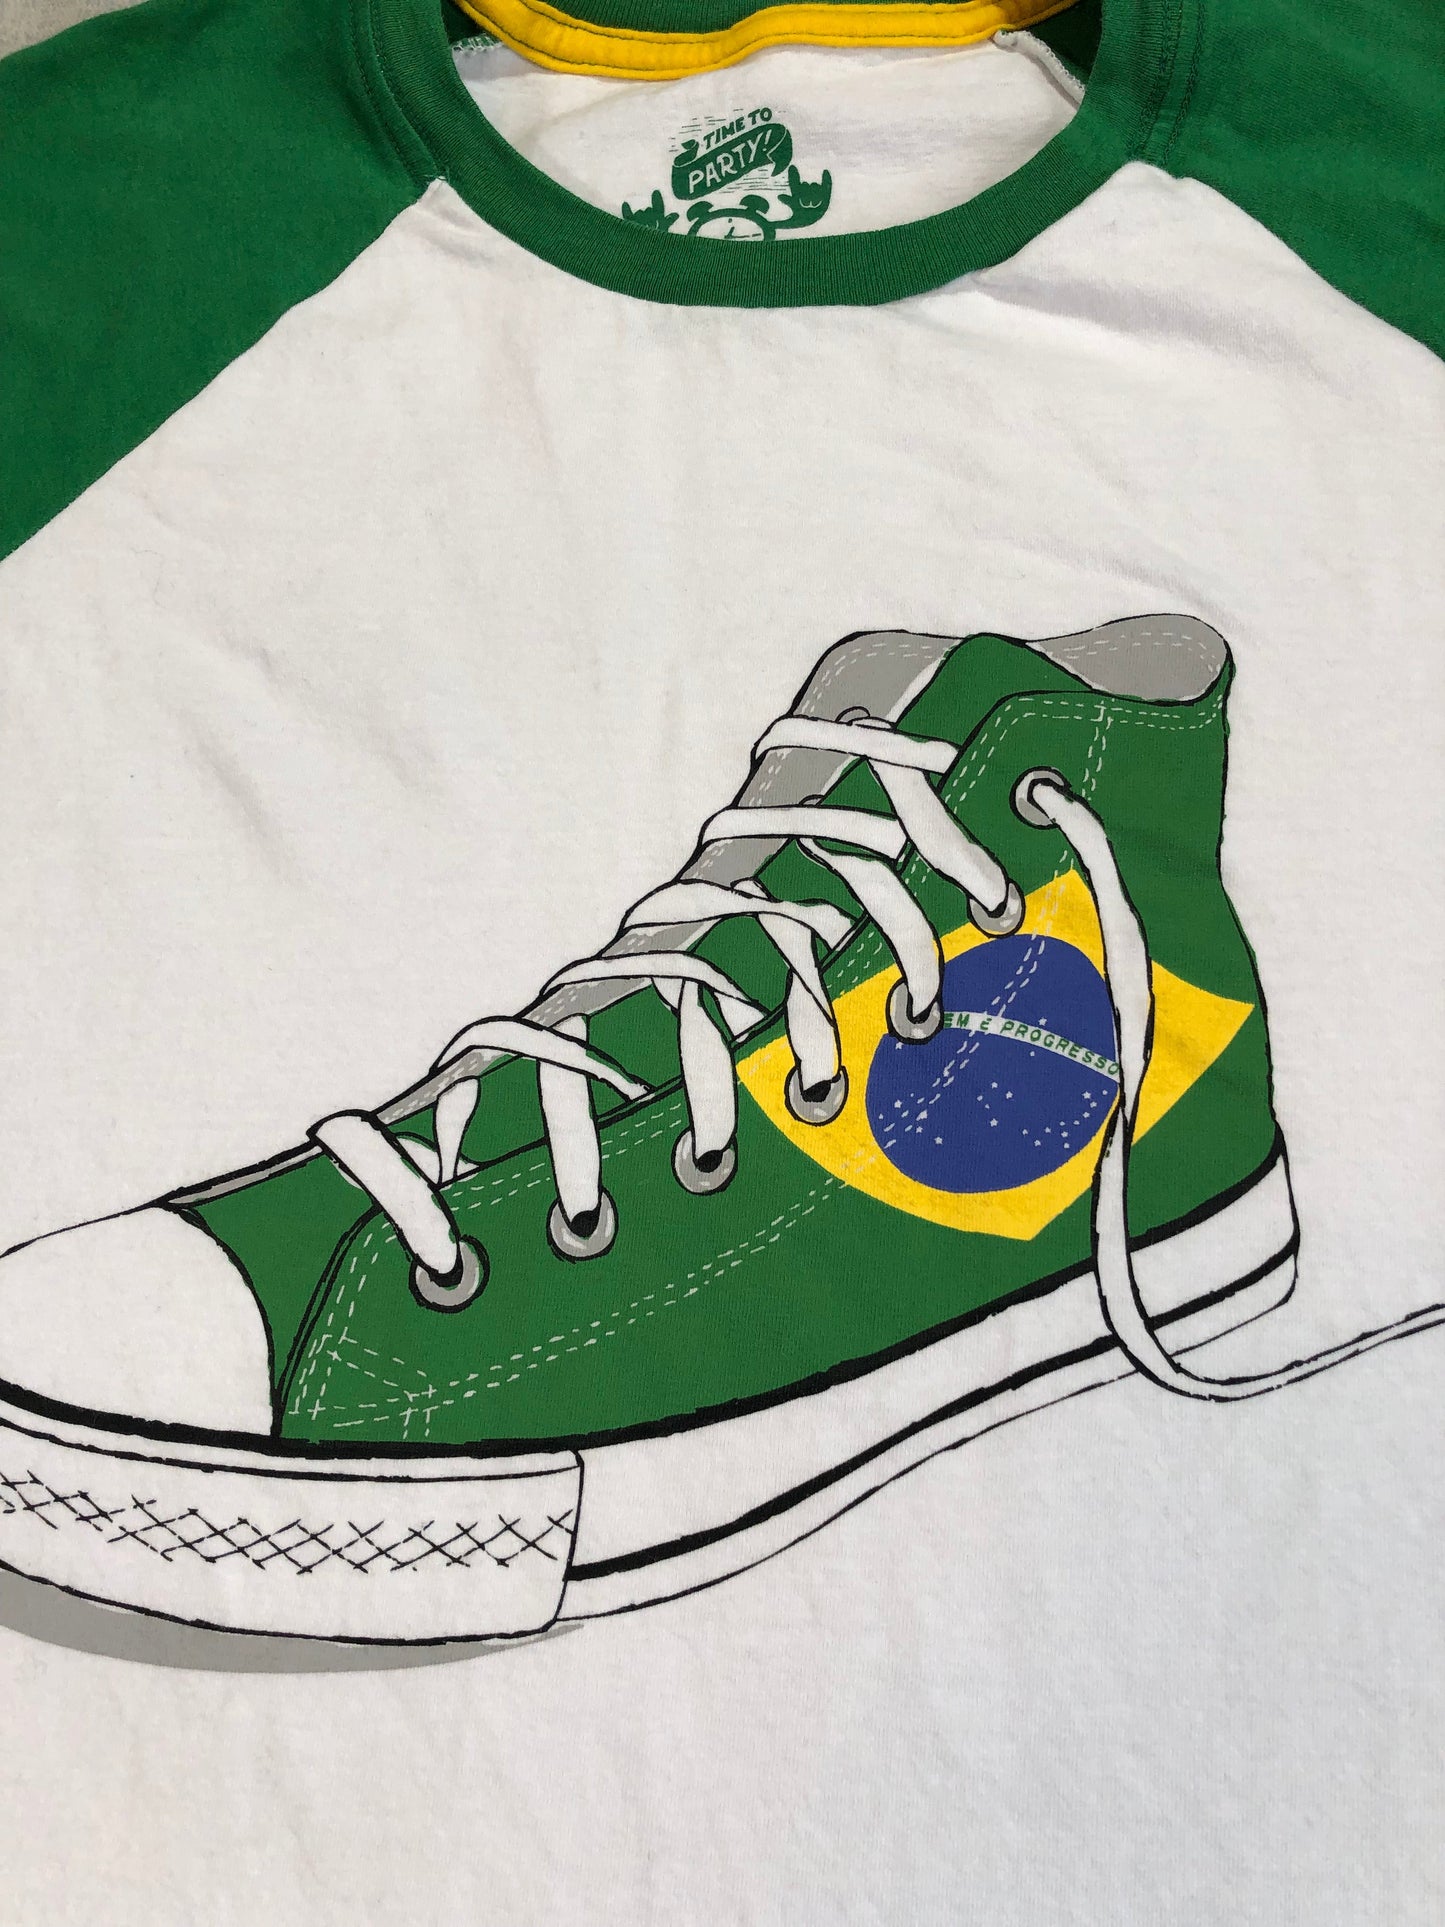 Brazil T-Shirt Mens Large White Graphic Print Sneakers Flag Rio de Janeiro PREOWNED